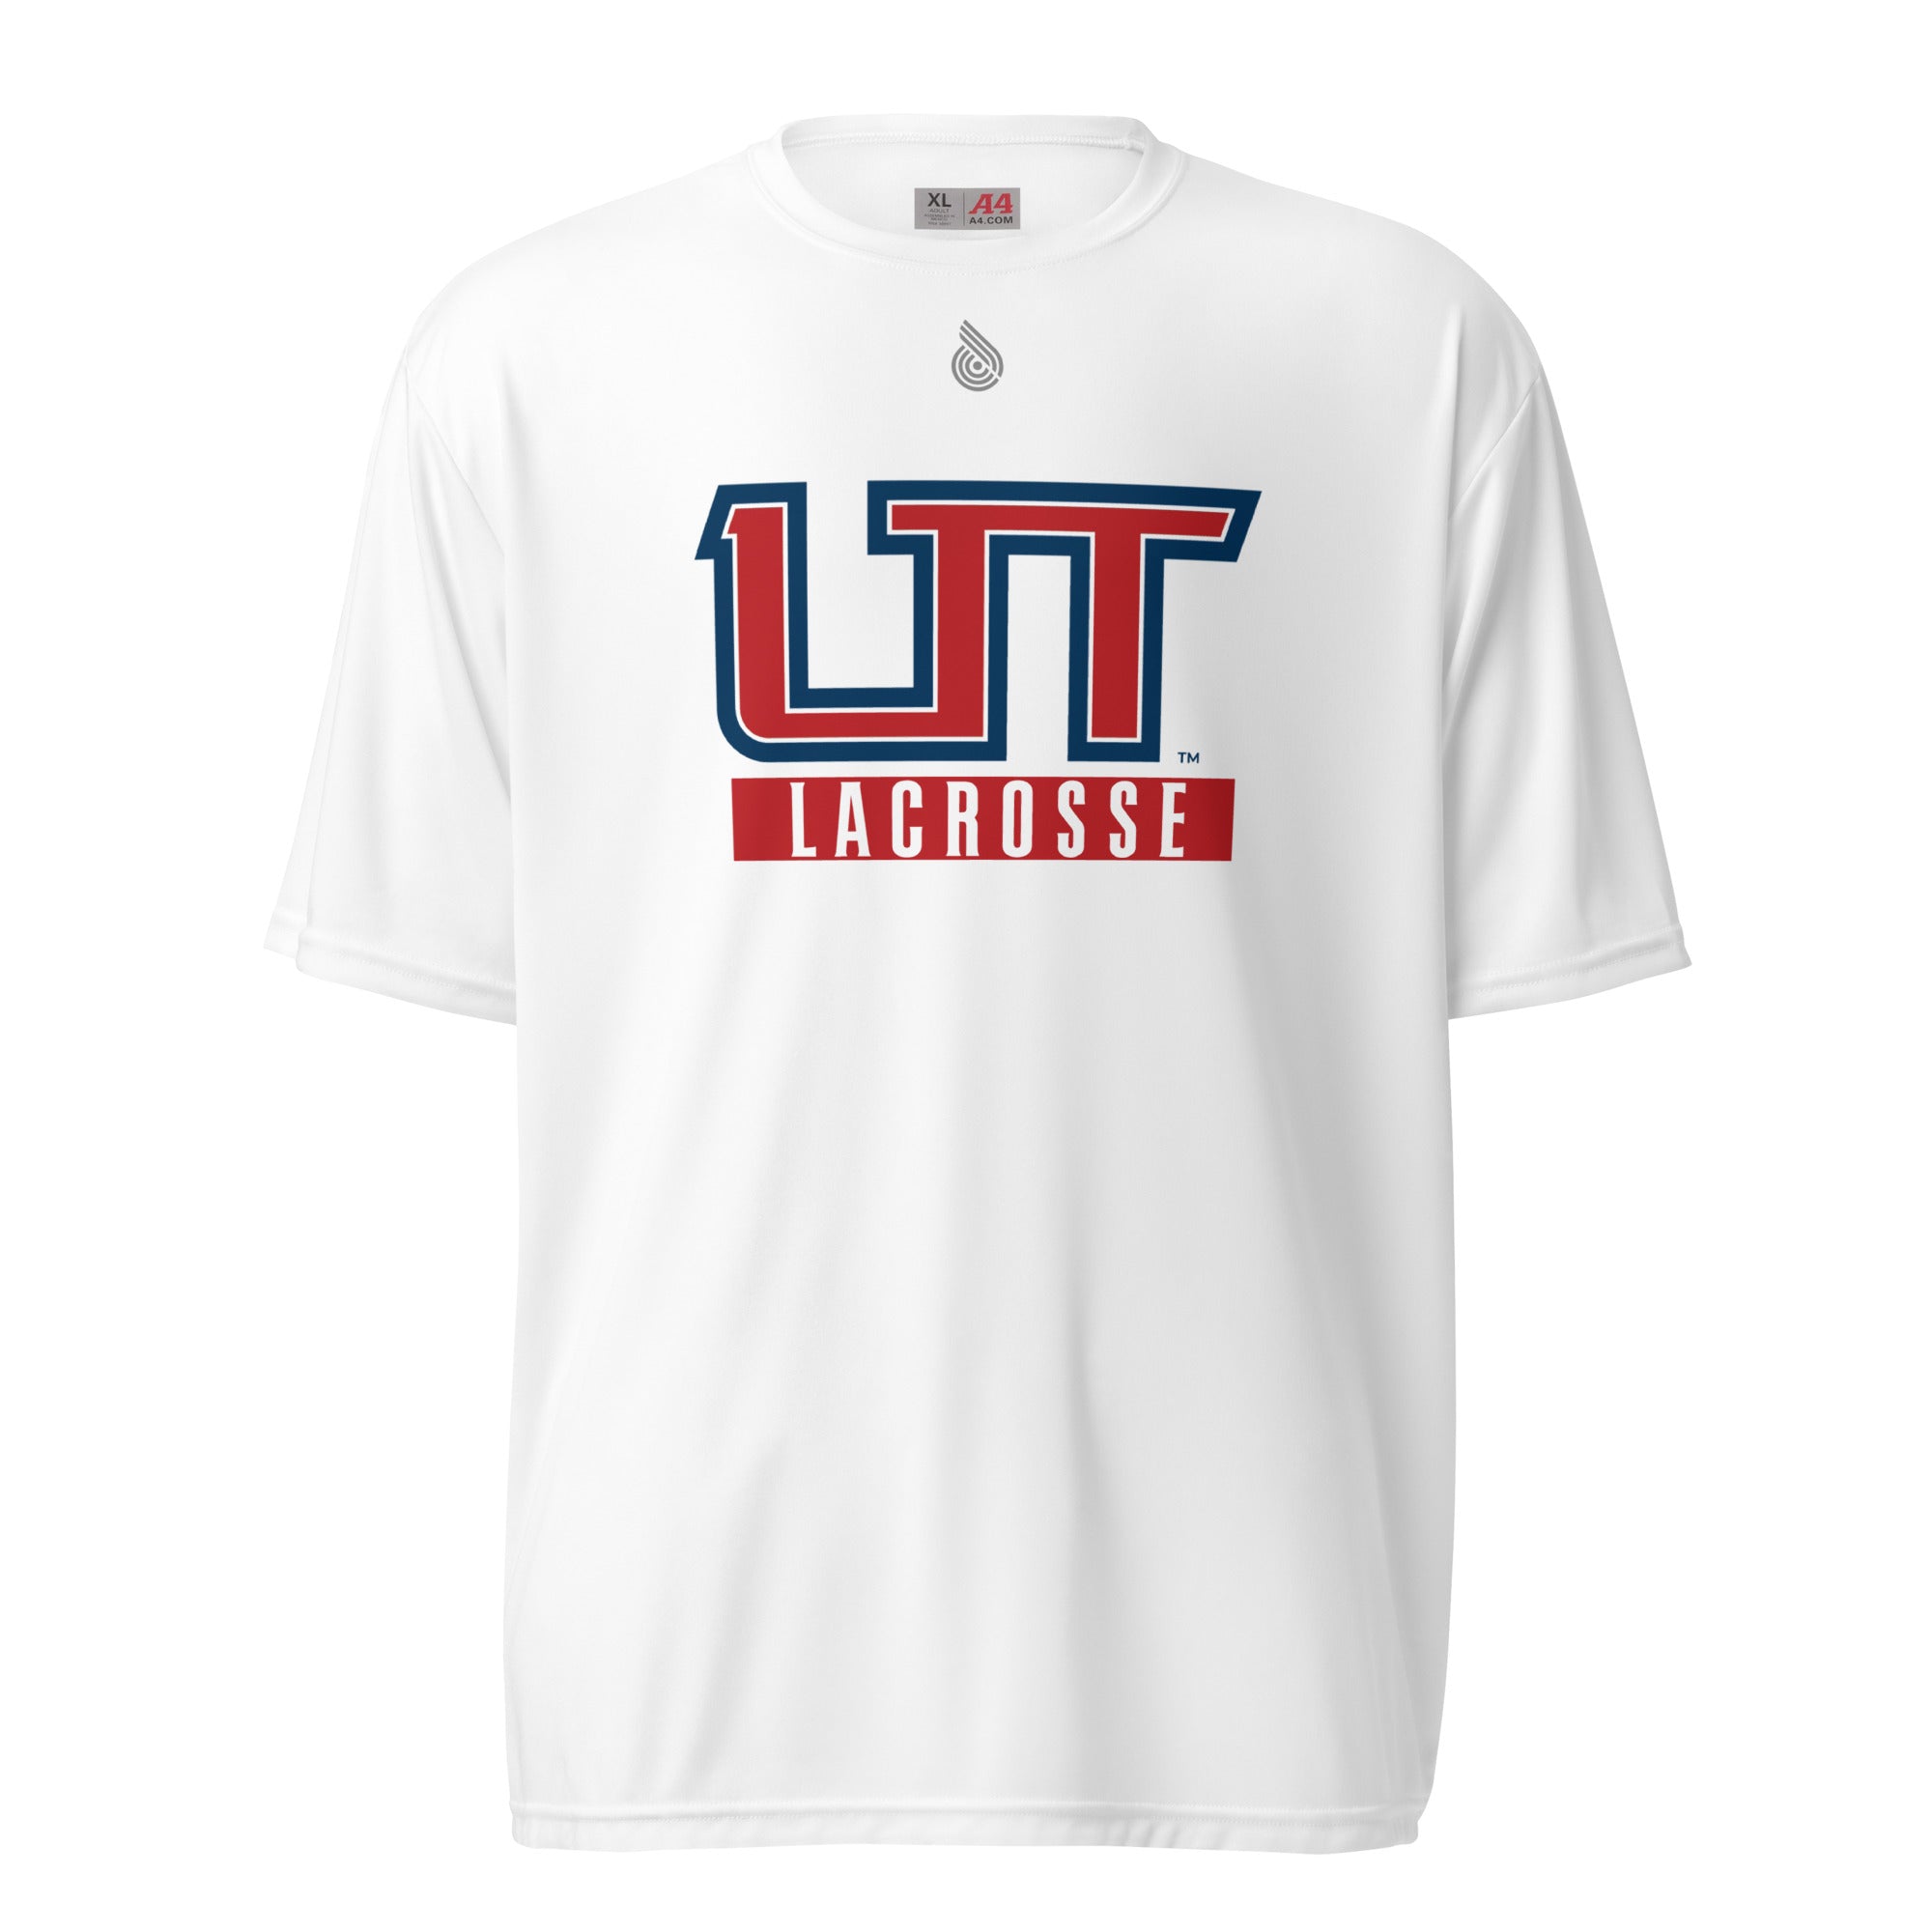 UT Unisex performance t-shirt